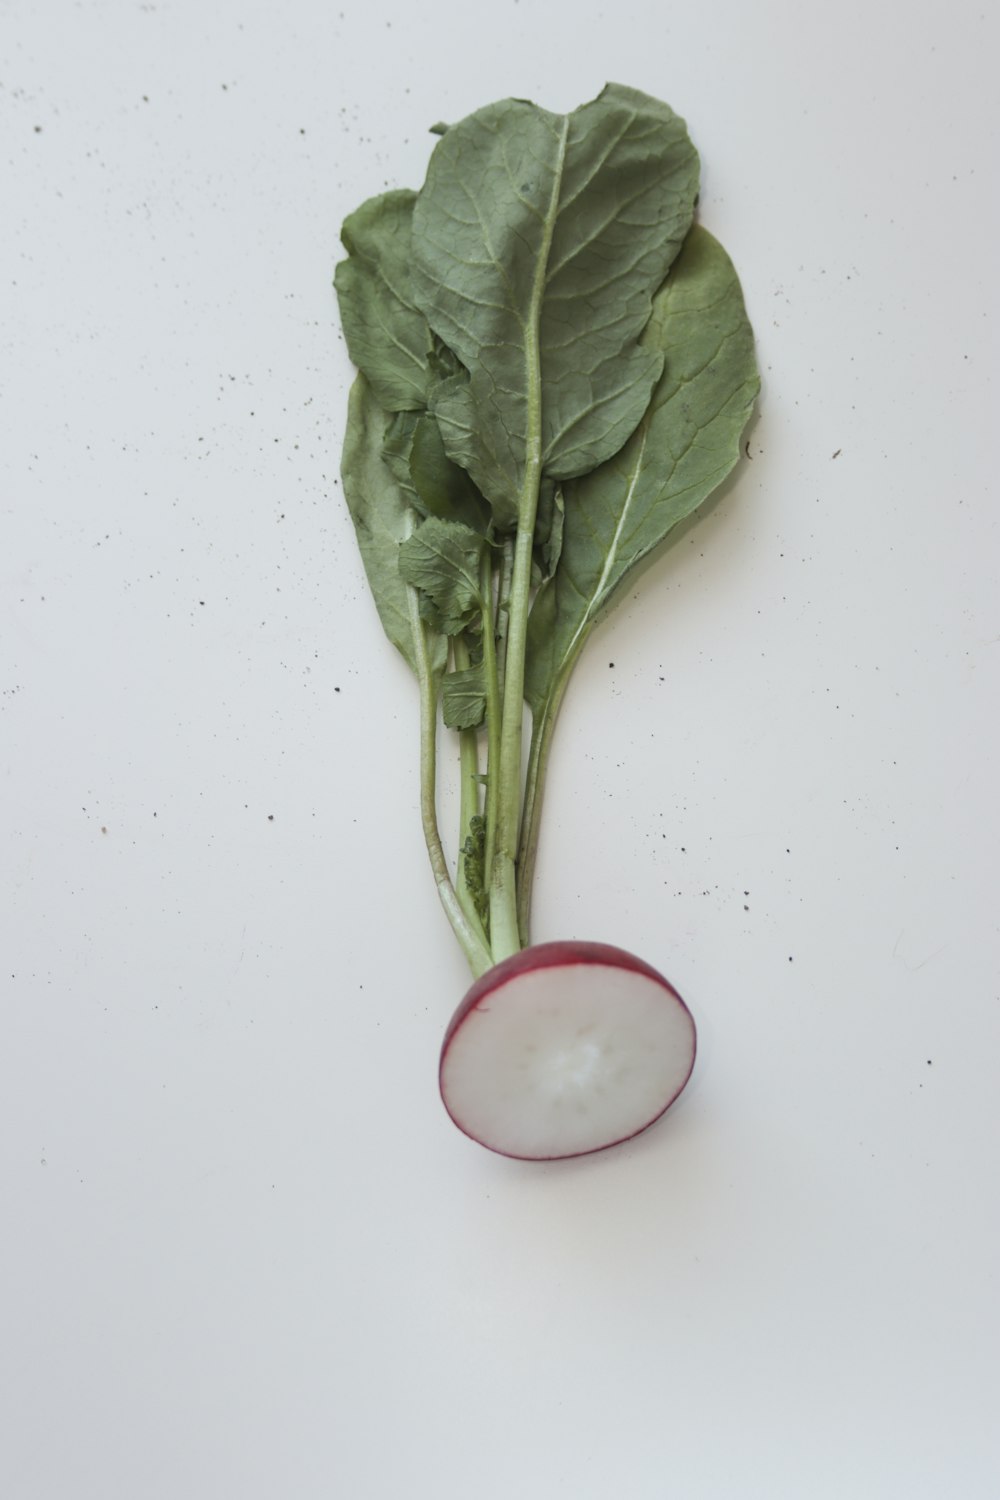 green vegetable on white table